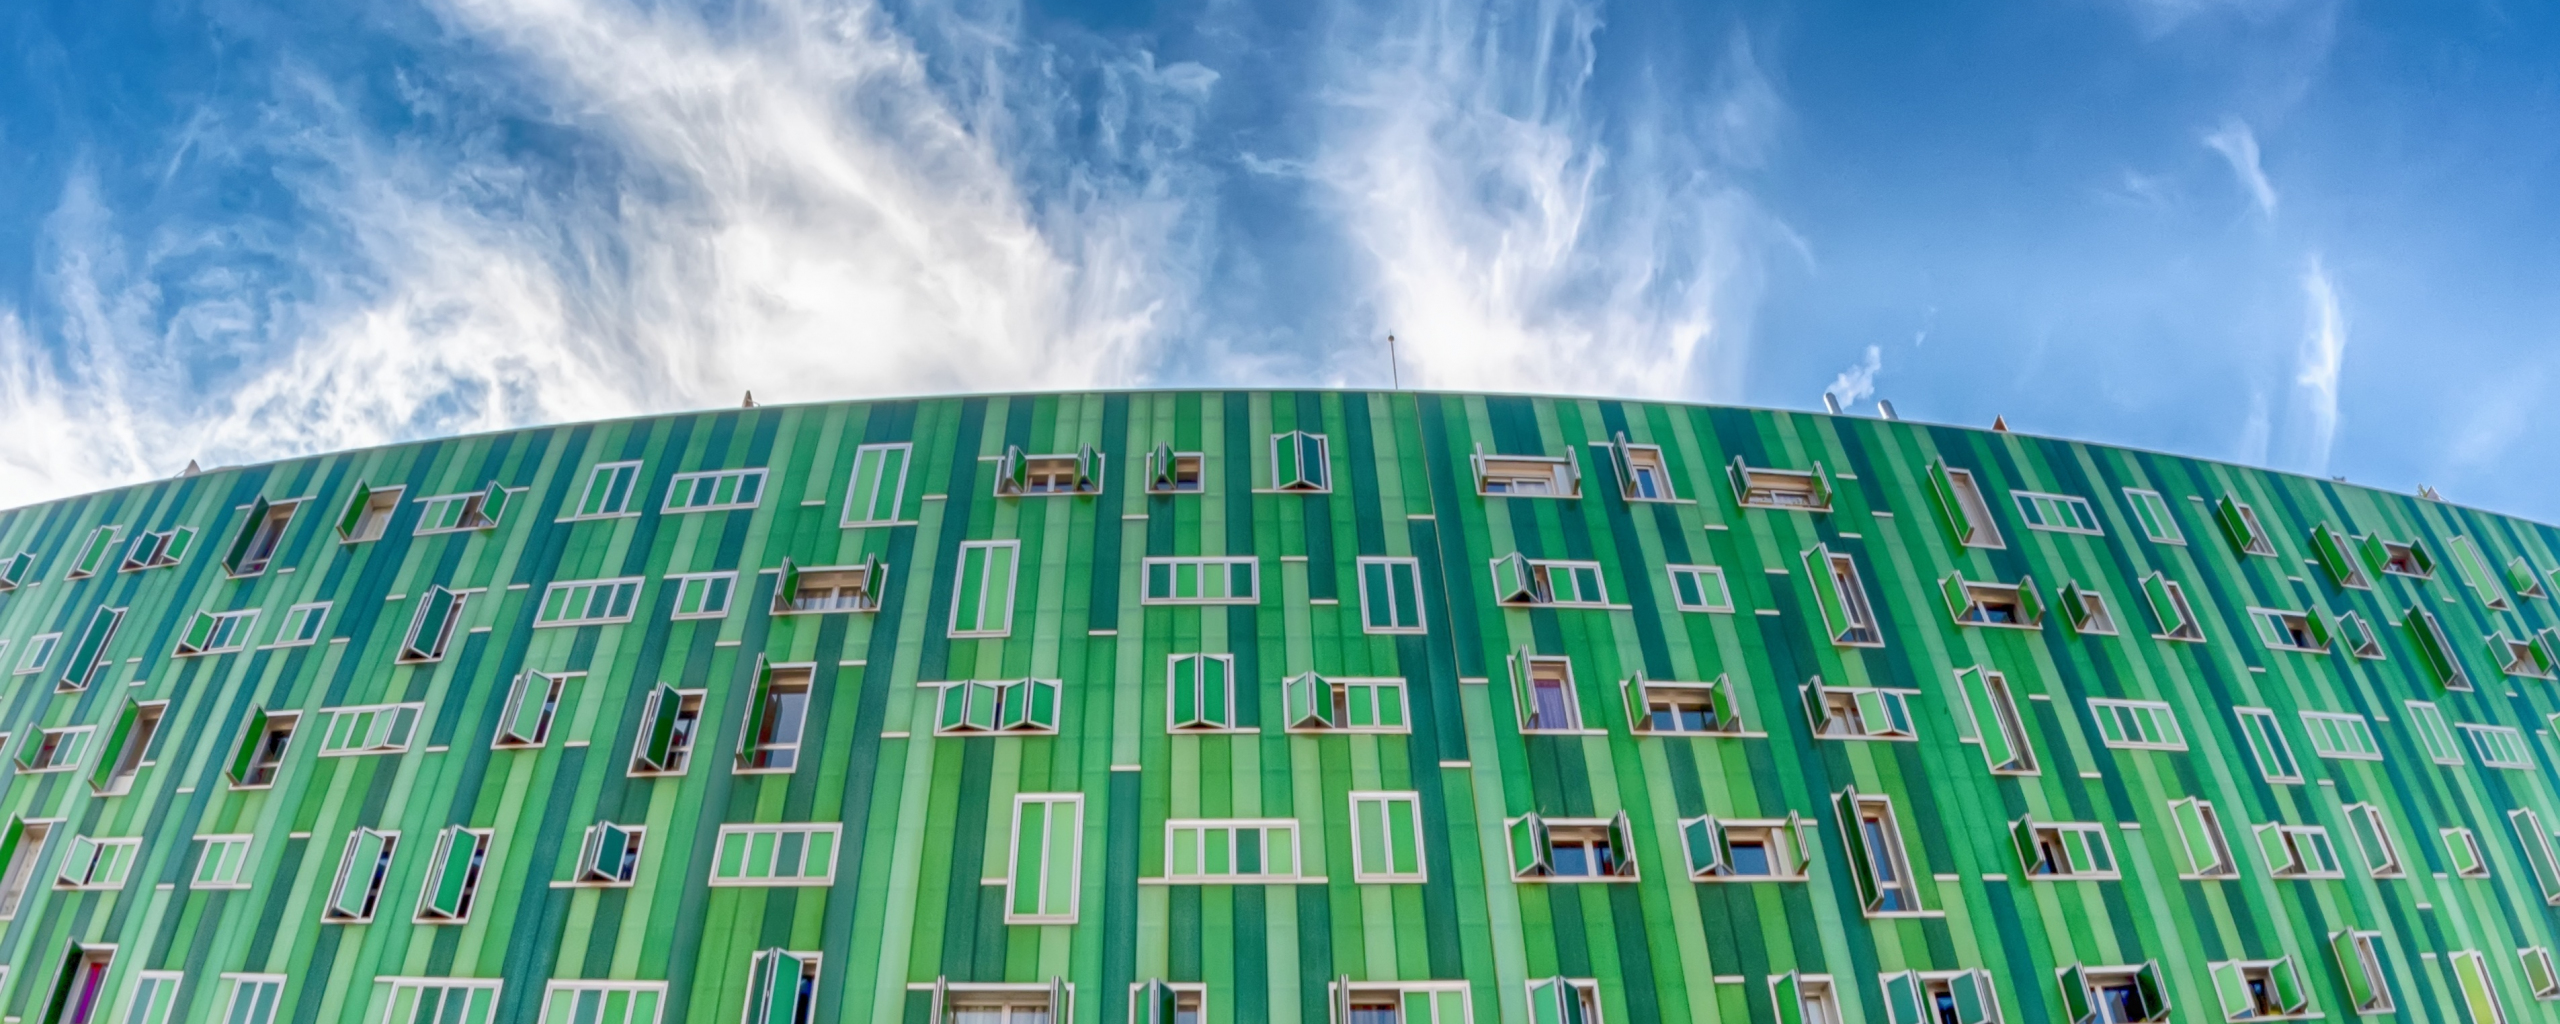 Download wallpaper 2560x1024 green, facade, sunny day, building ...